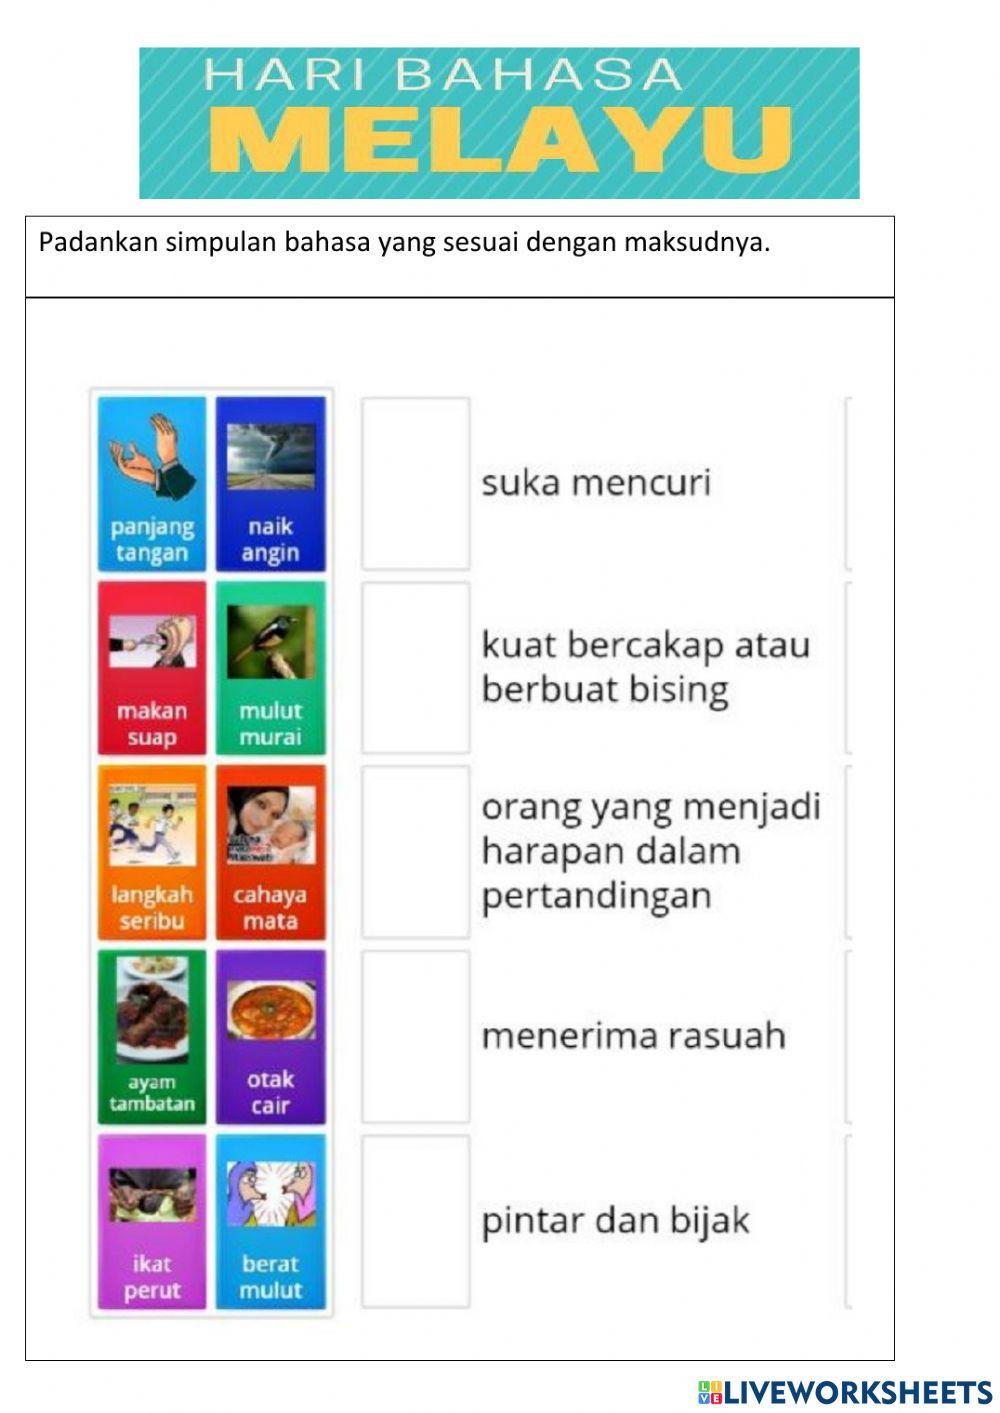 Hari Bahasa Melayu simpulan bahasa